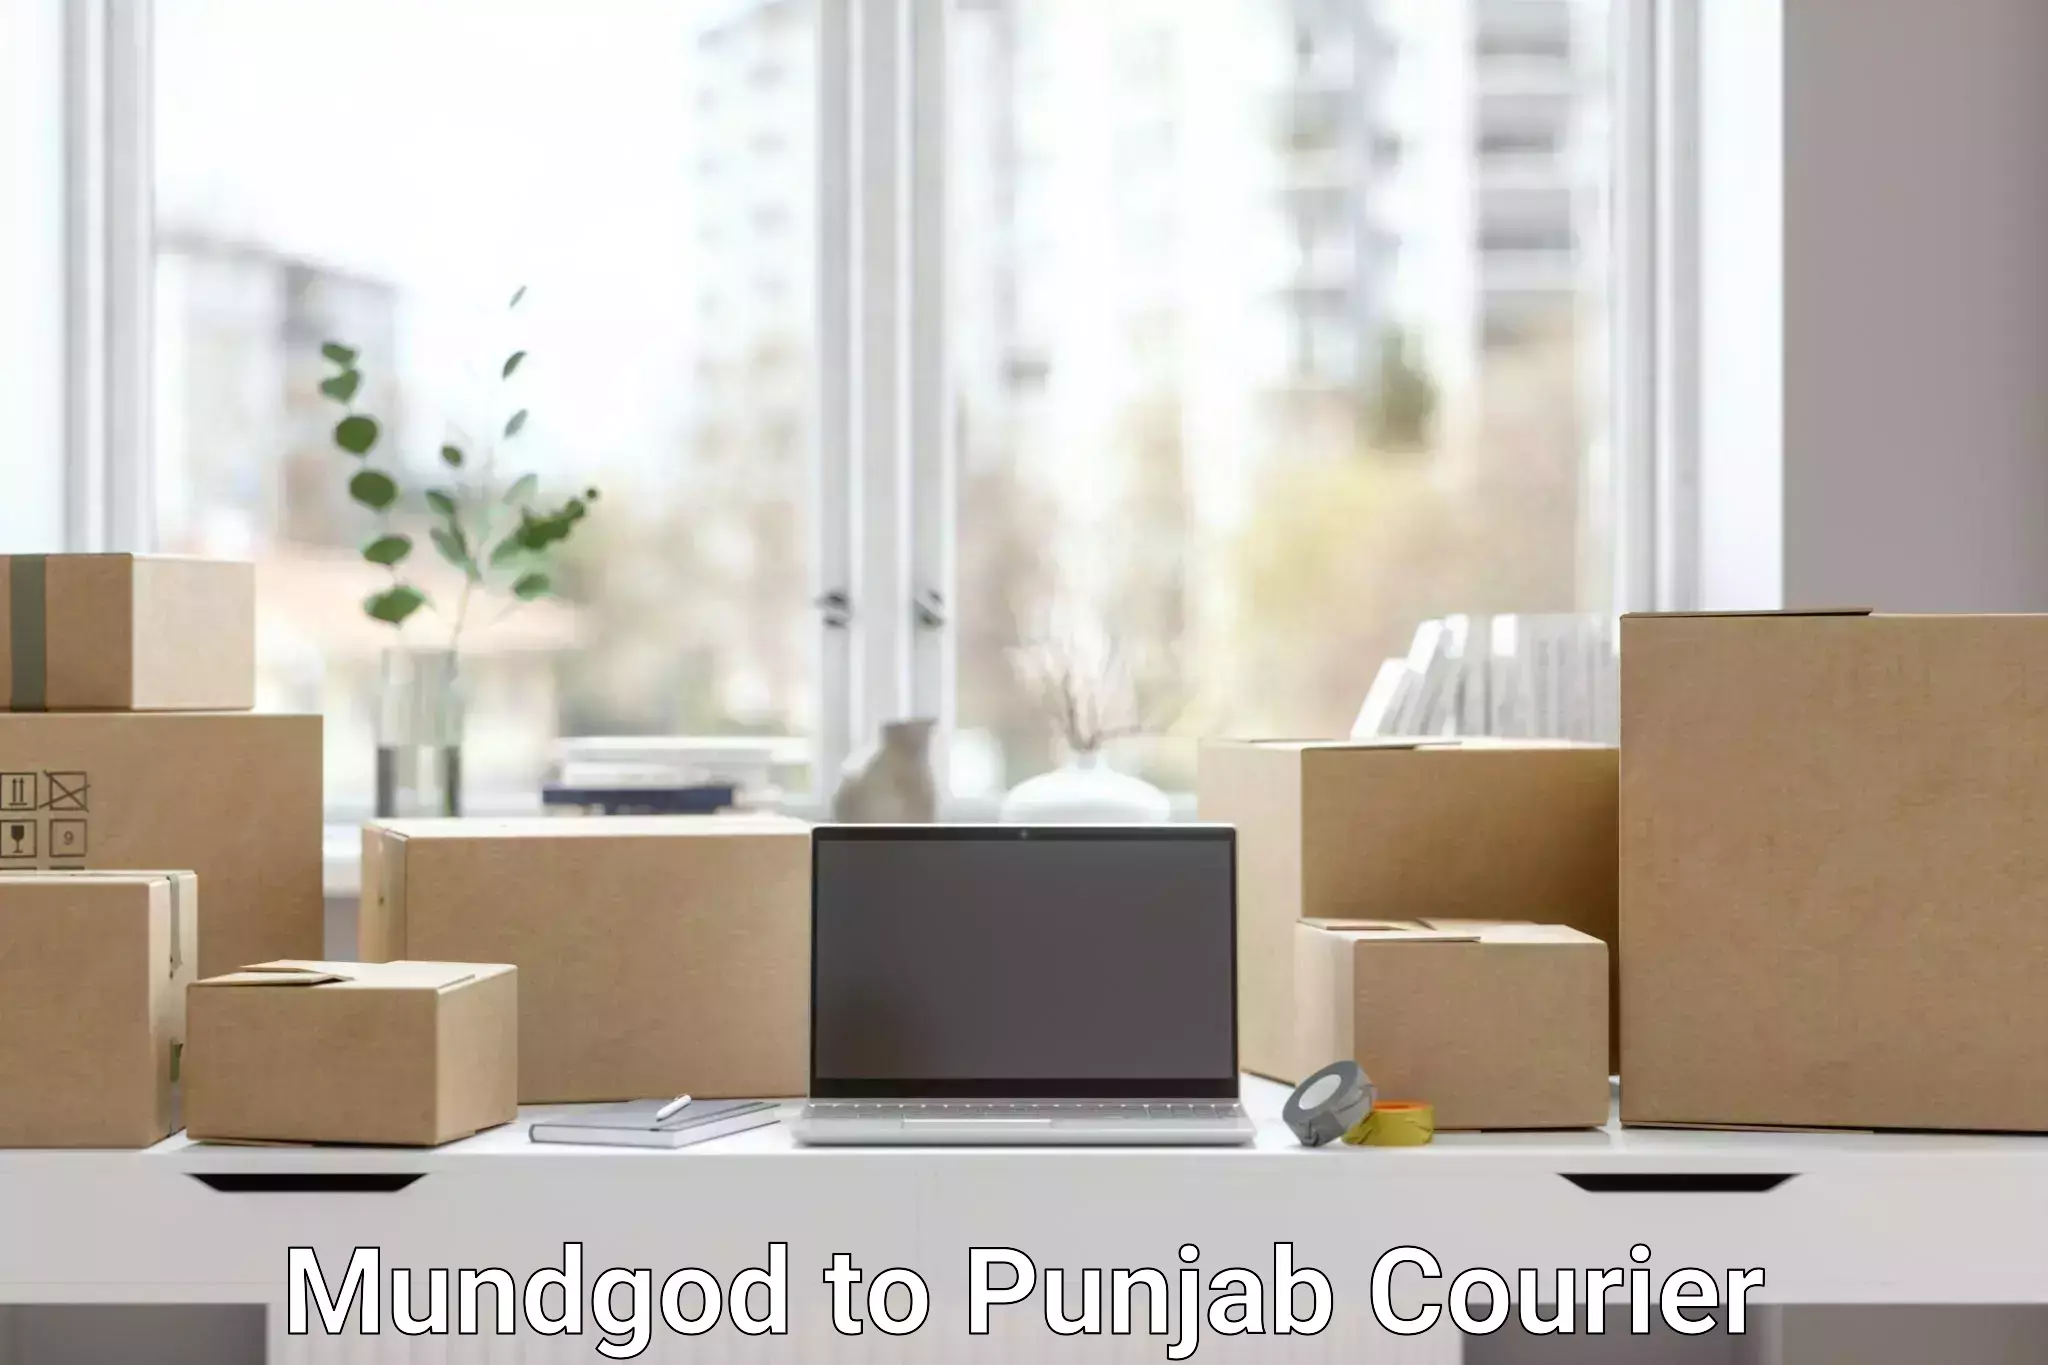 24-hour courier service Mundgod to Bhadaur